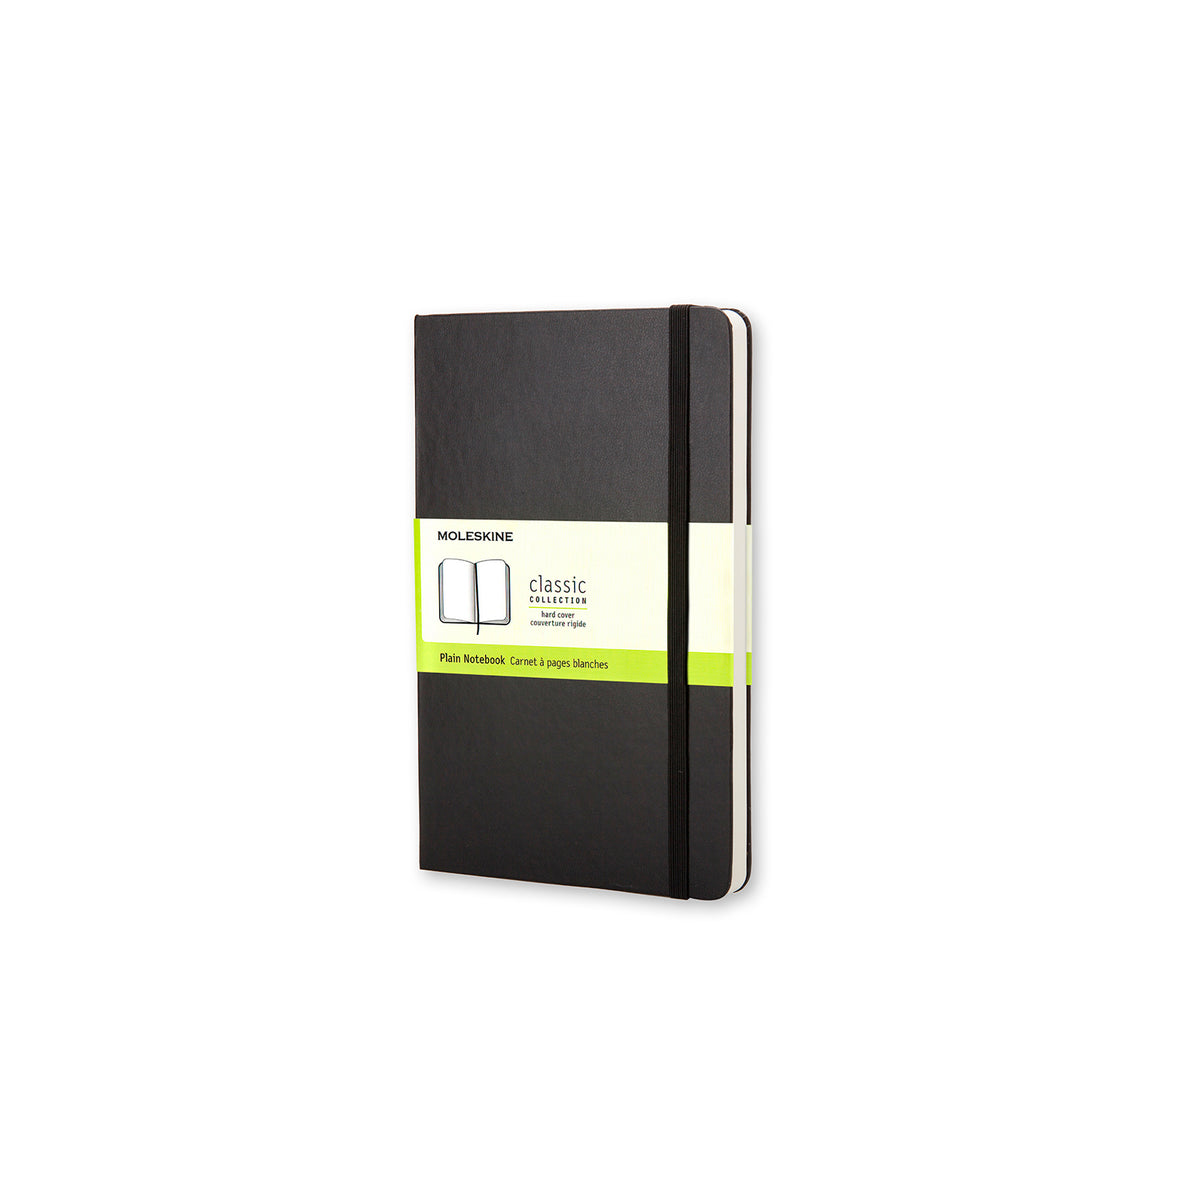 Moleskine - Classic Hard Cover Notebook - Plain - Pocket - Black